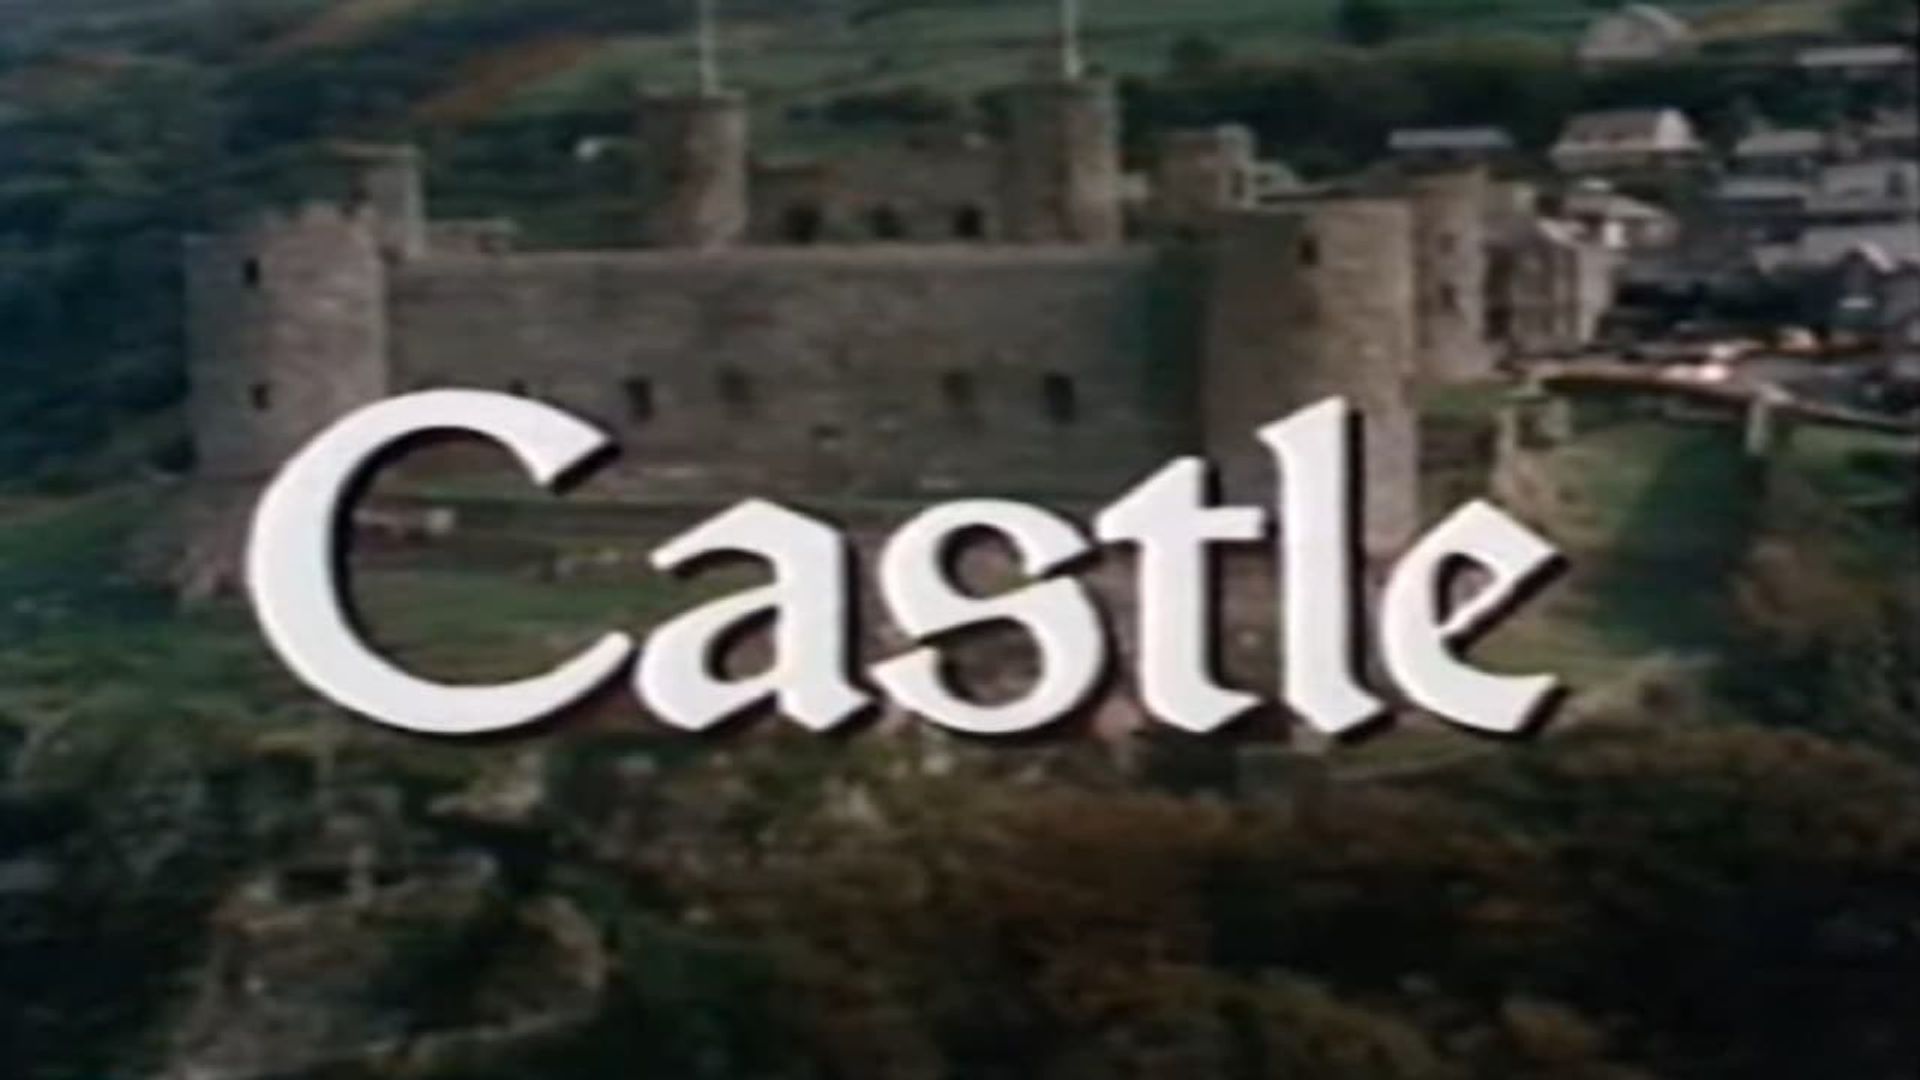 David Macaulay: Castle background